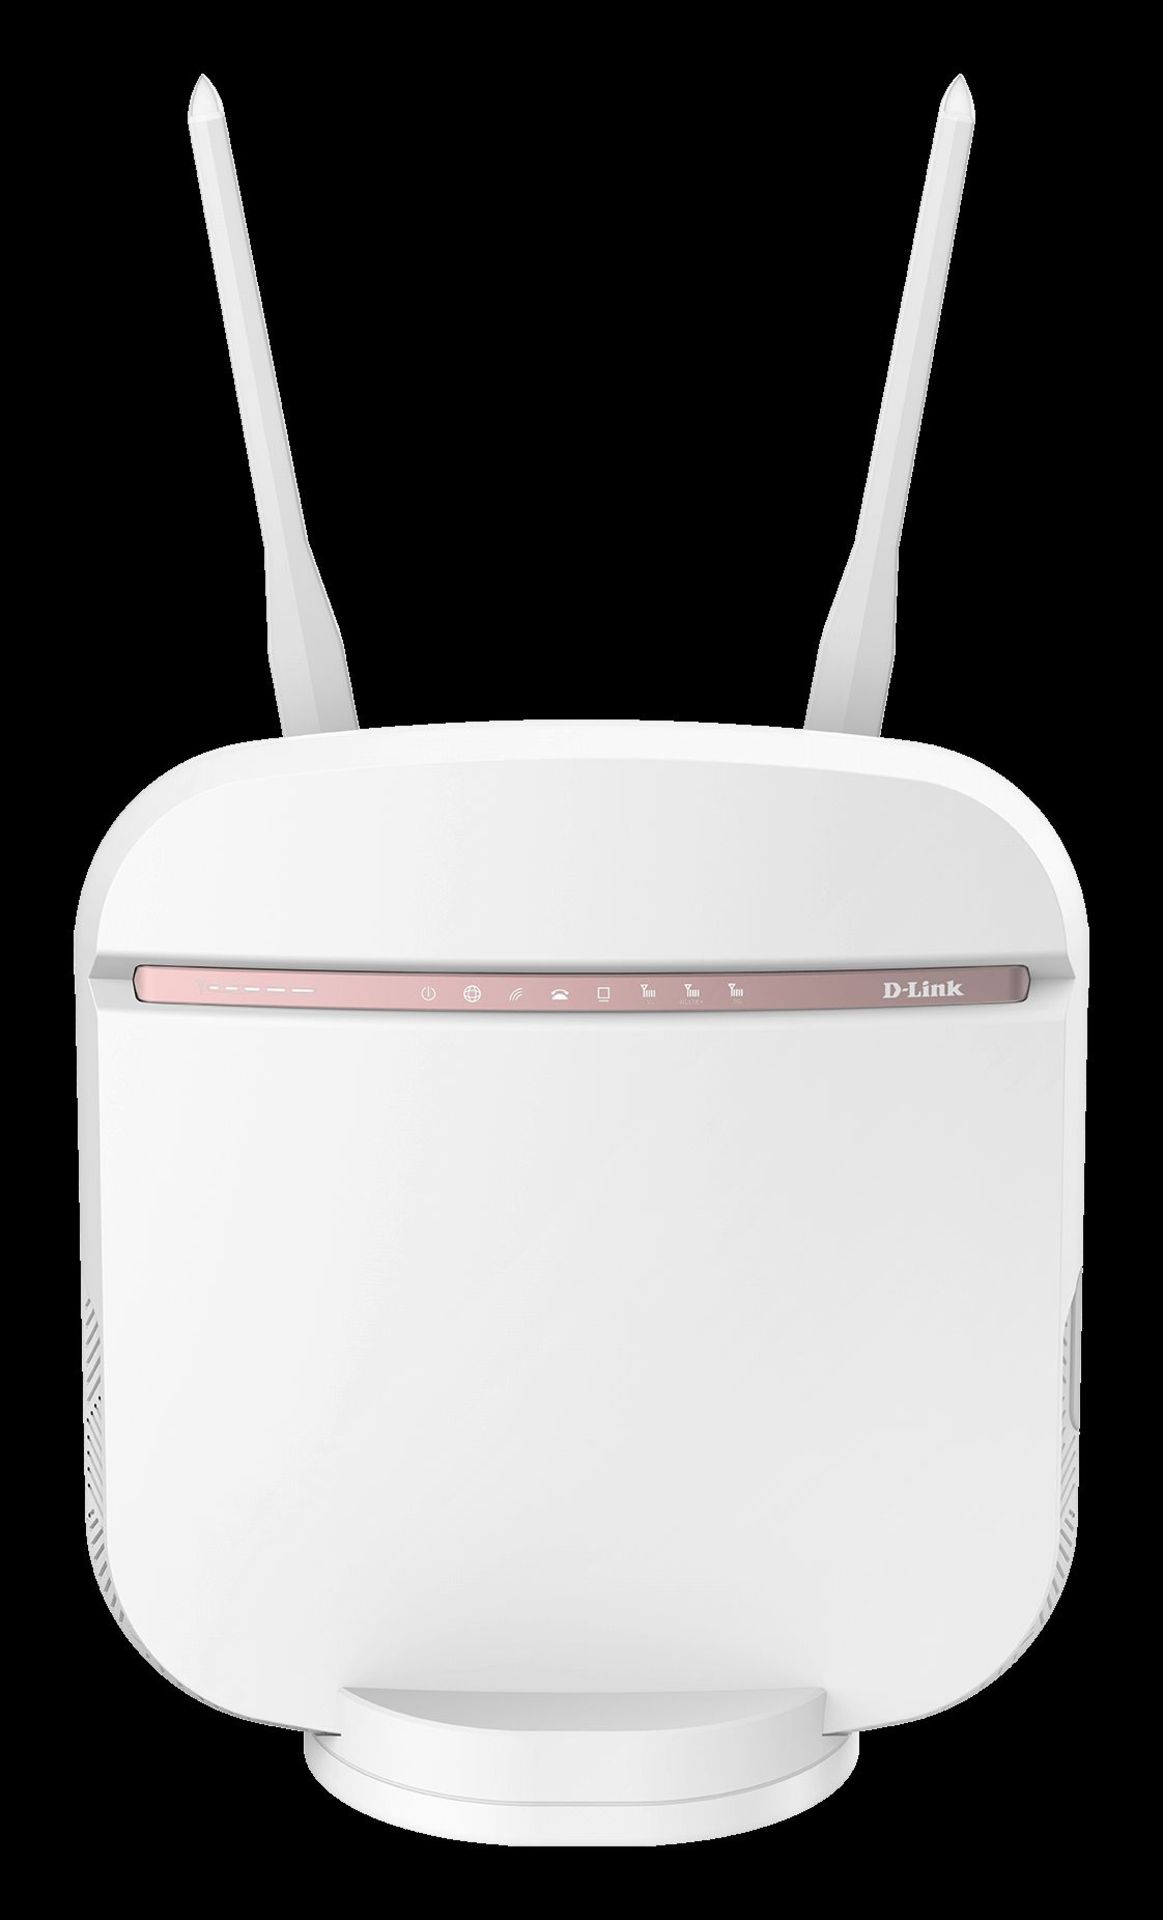 D-Link DWR-978 - wireless router - WWAN - Wi-Fi 5 - desktop. - P2. RRP £415.96. Experience next?